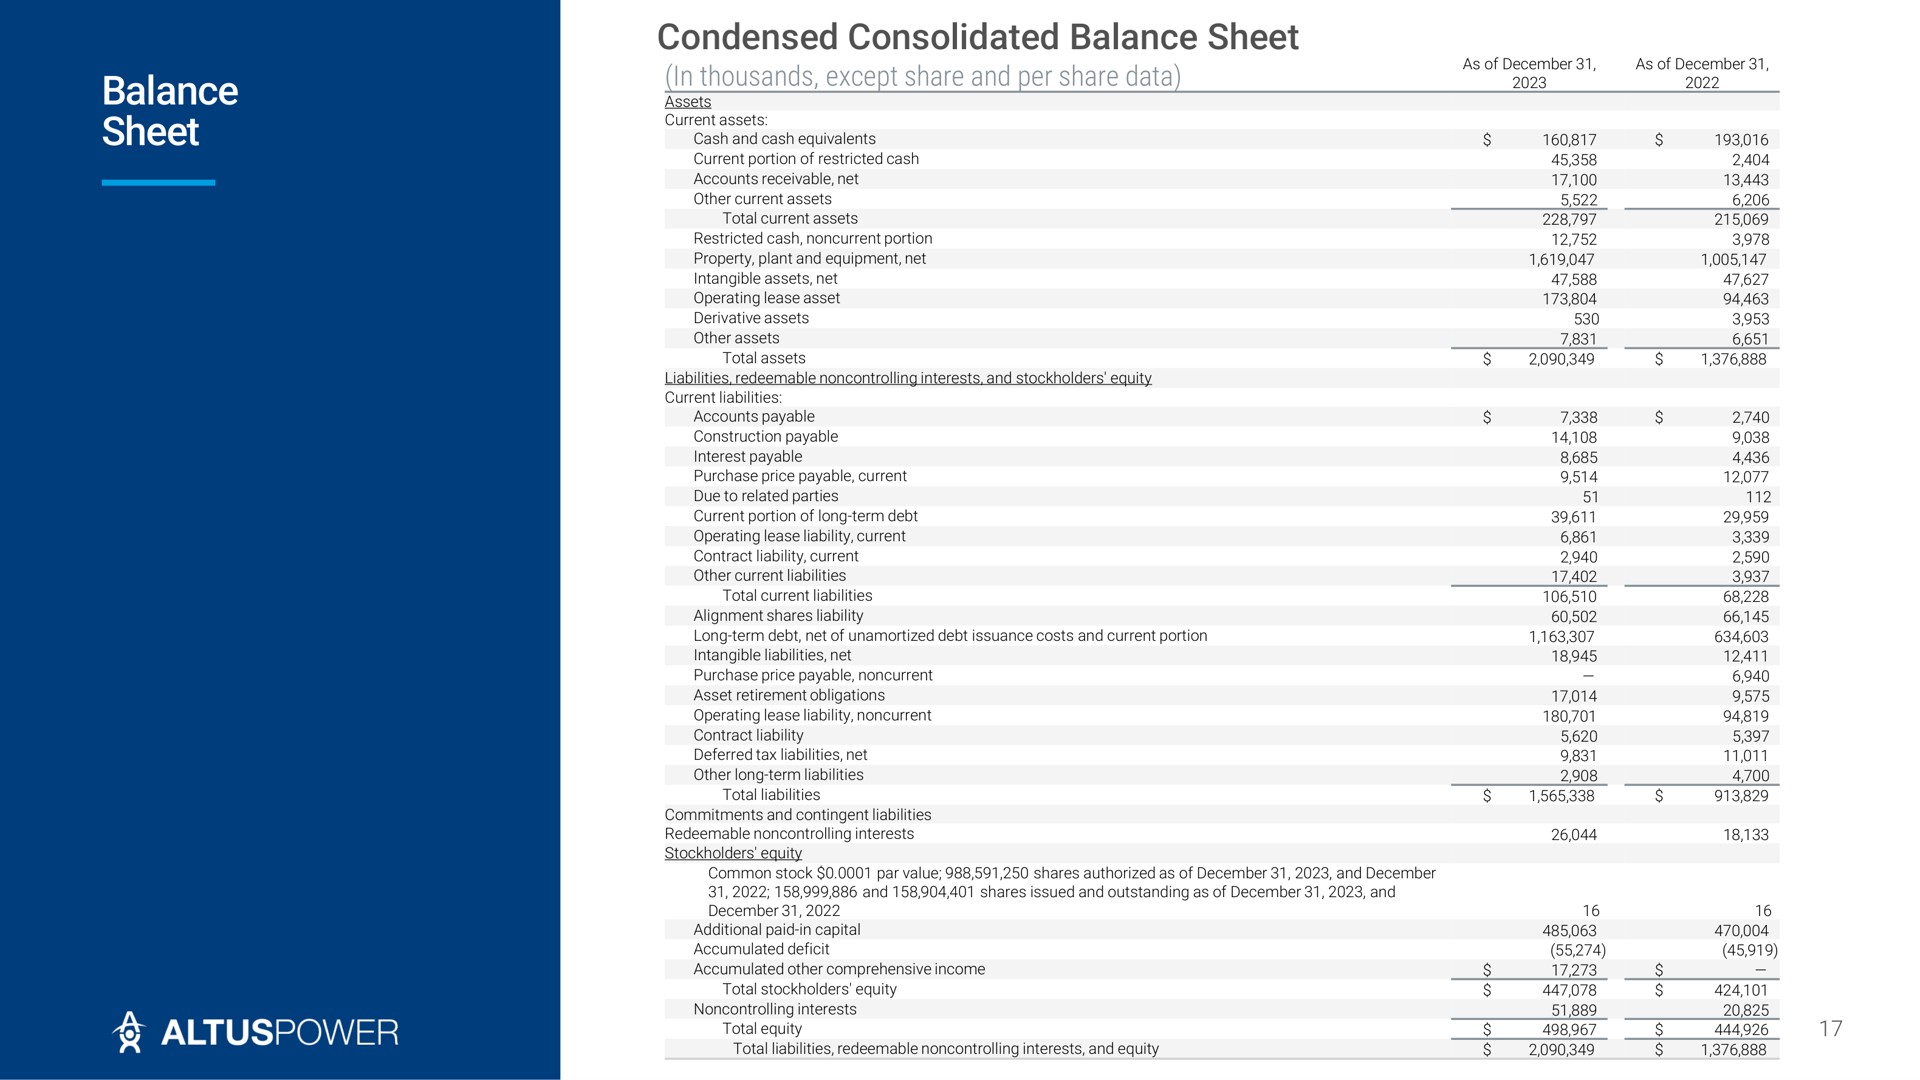 balance sheet condensed consolidated balance sheet | Altus Power